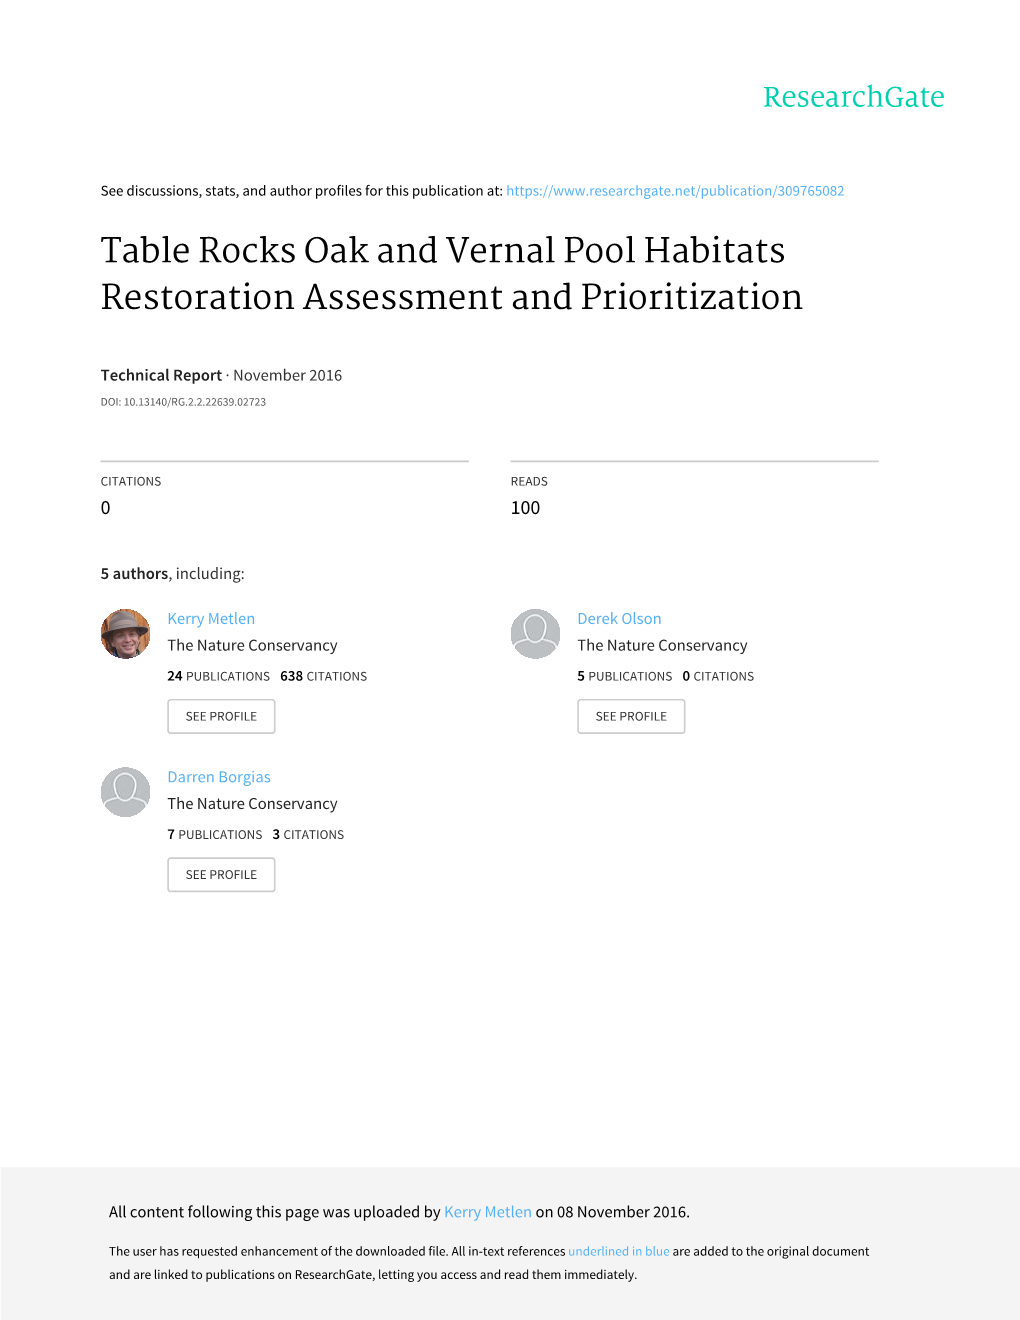 Table Rocks Oak and Vernal Pool Habitats Assessment